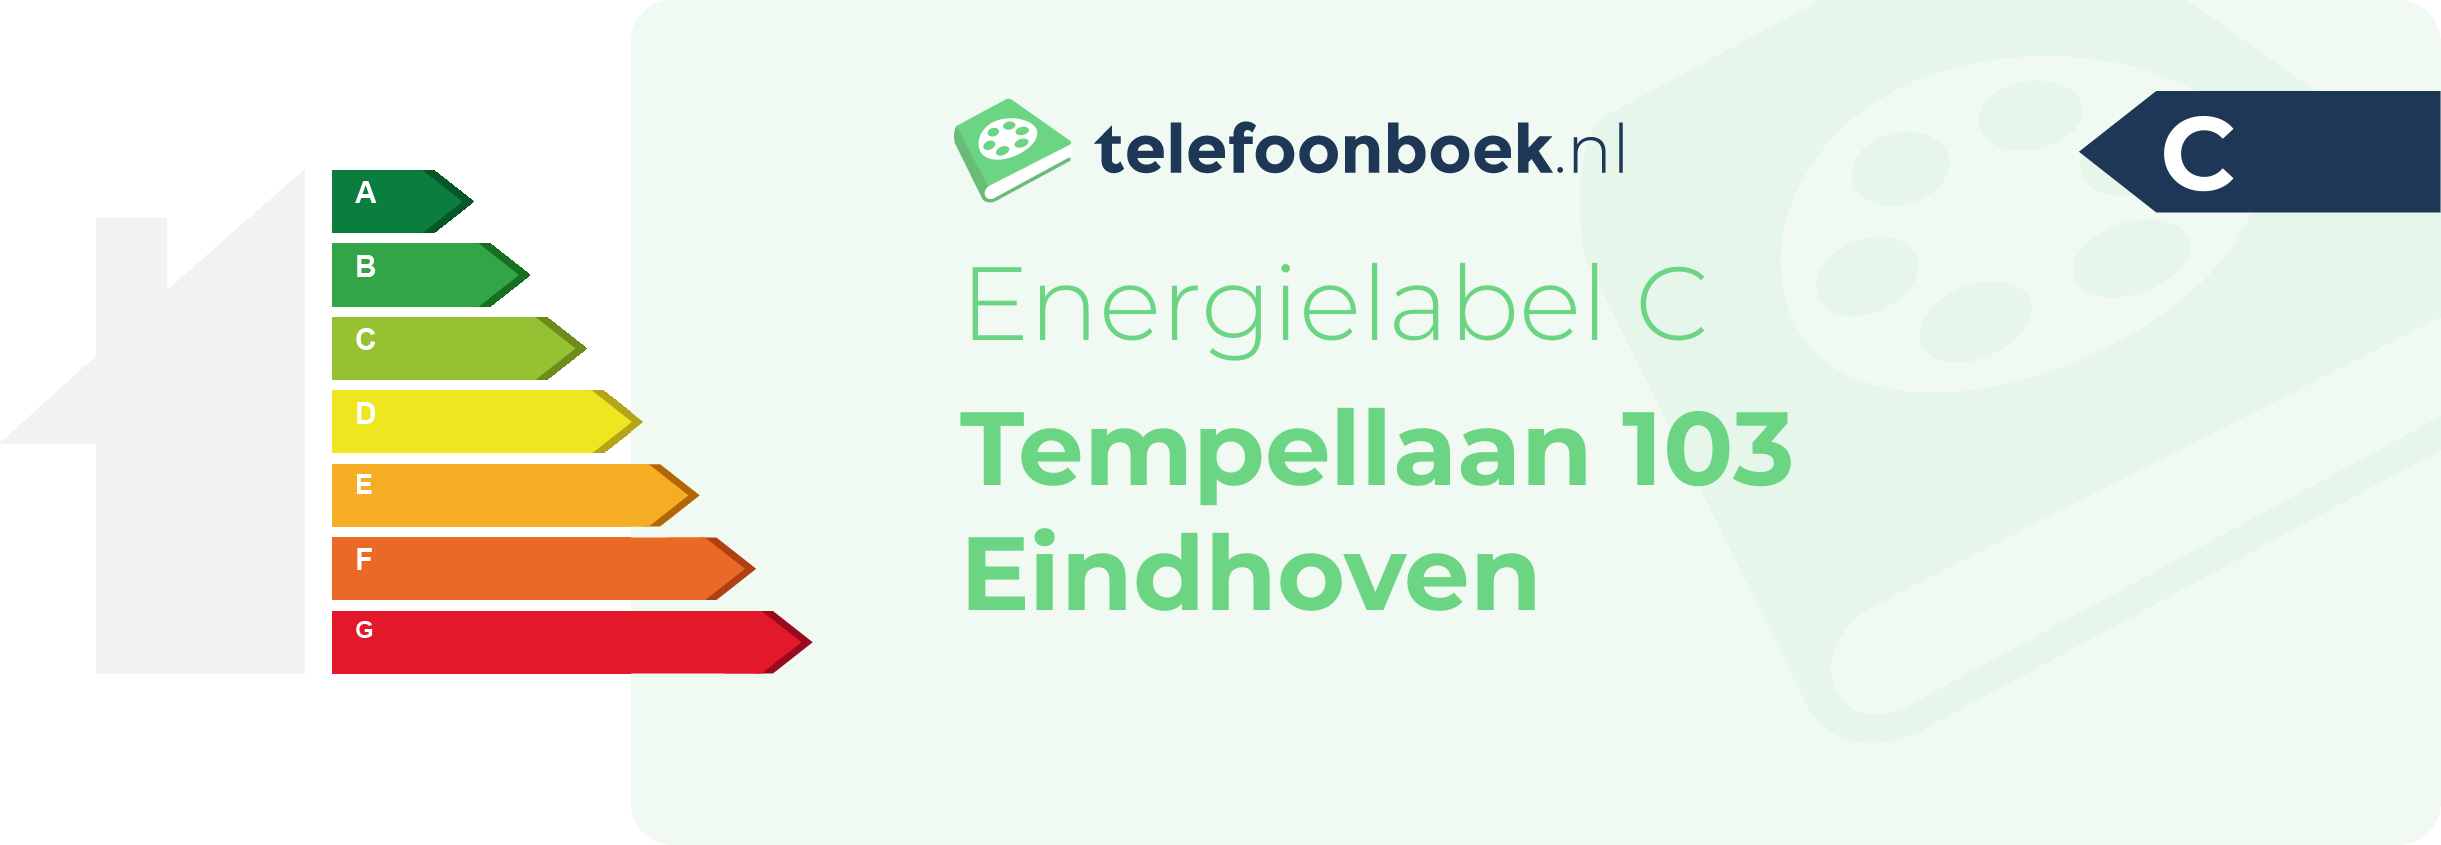 Energielabel Tempellaan 103 Eindhoven